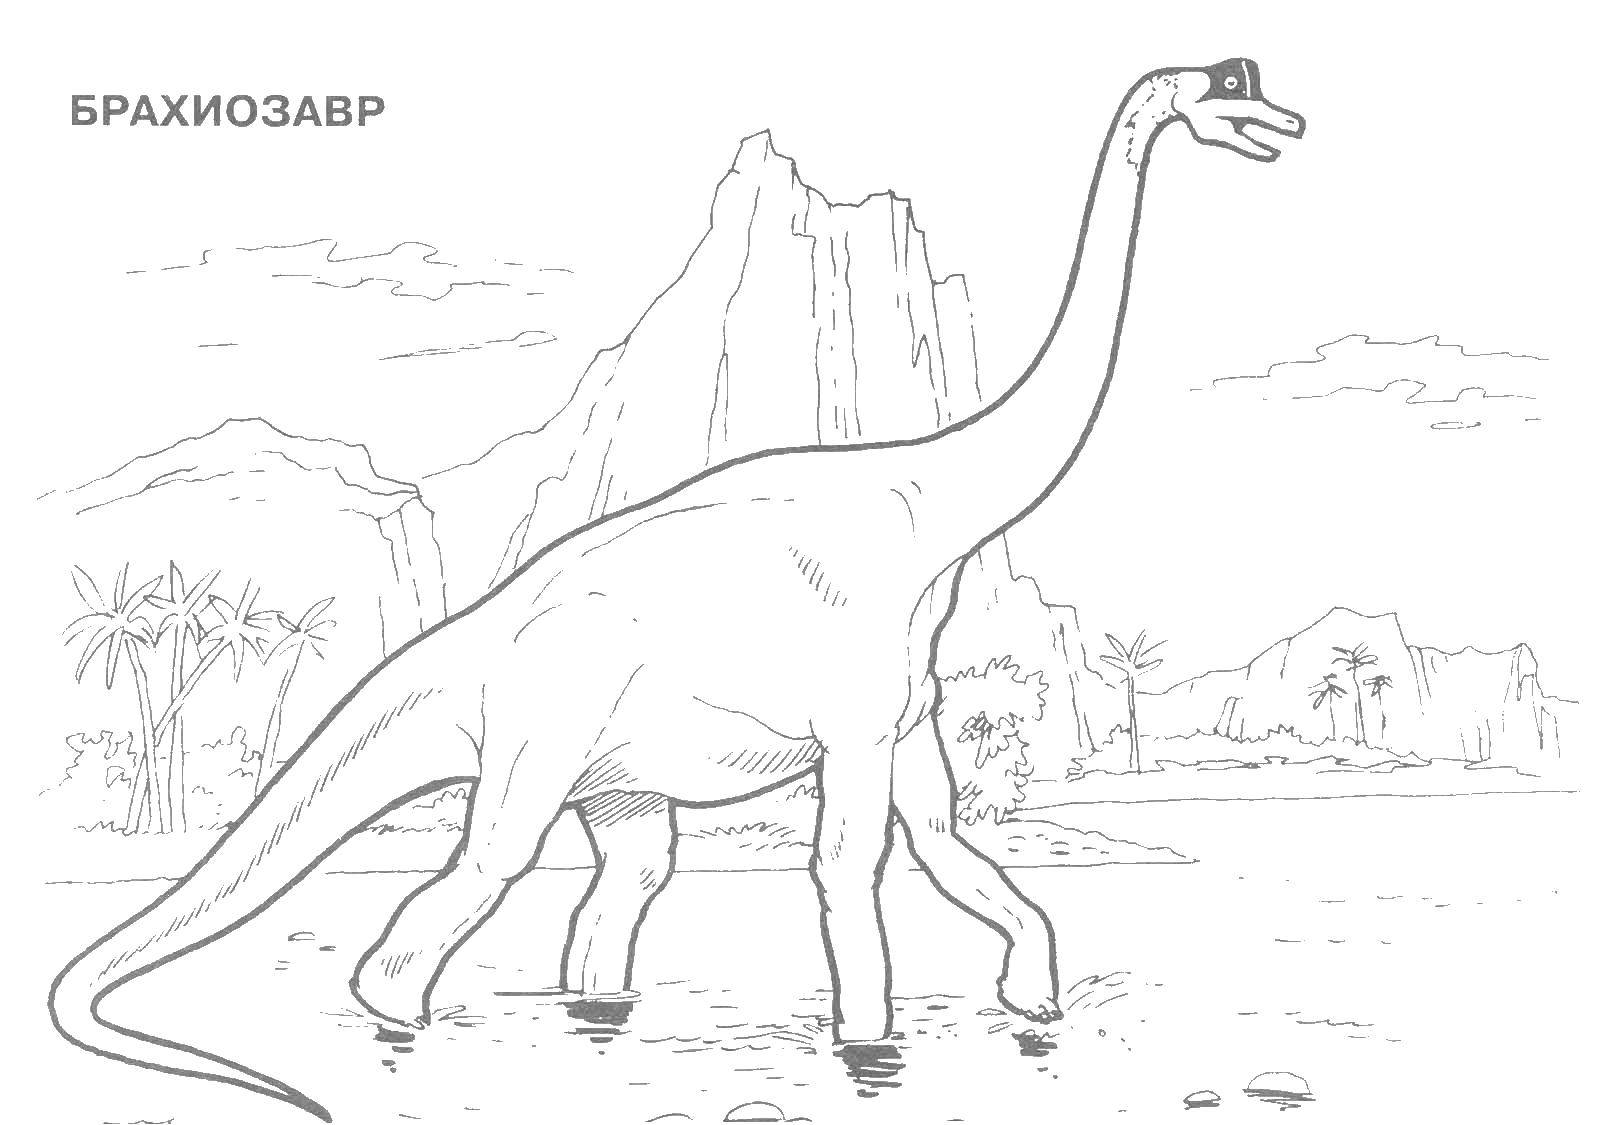 Coloring Brachiosaurus dinosaur Jurassic. Category Jurassic Park. Tags:  Brachiosaurus, dinosaur.